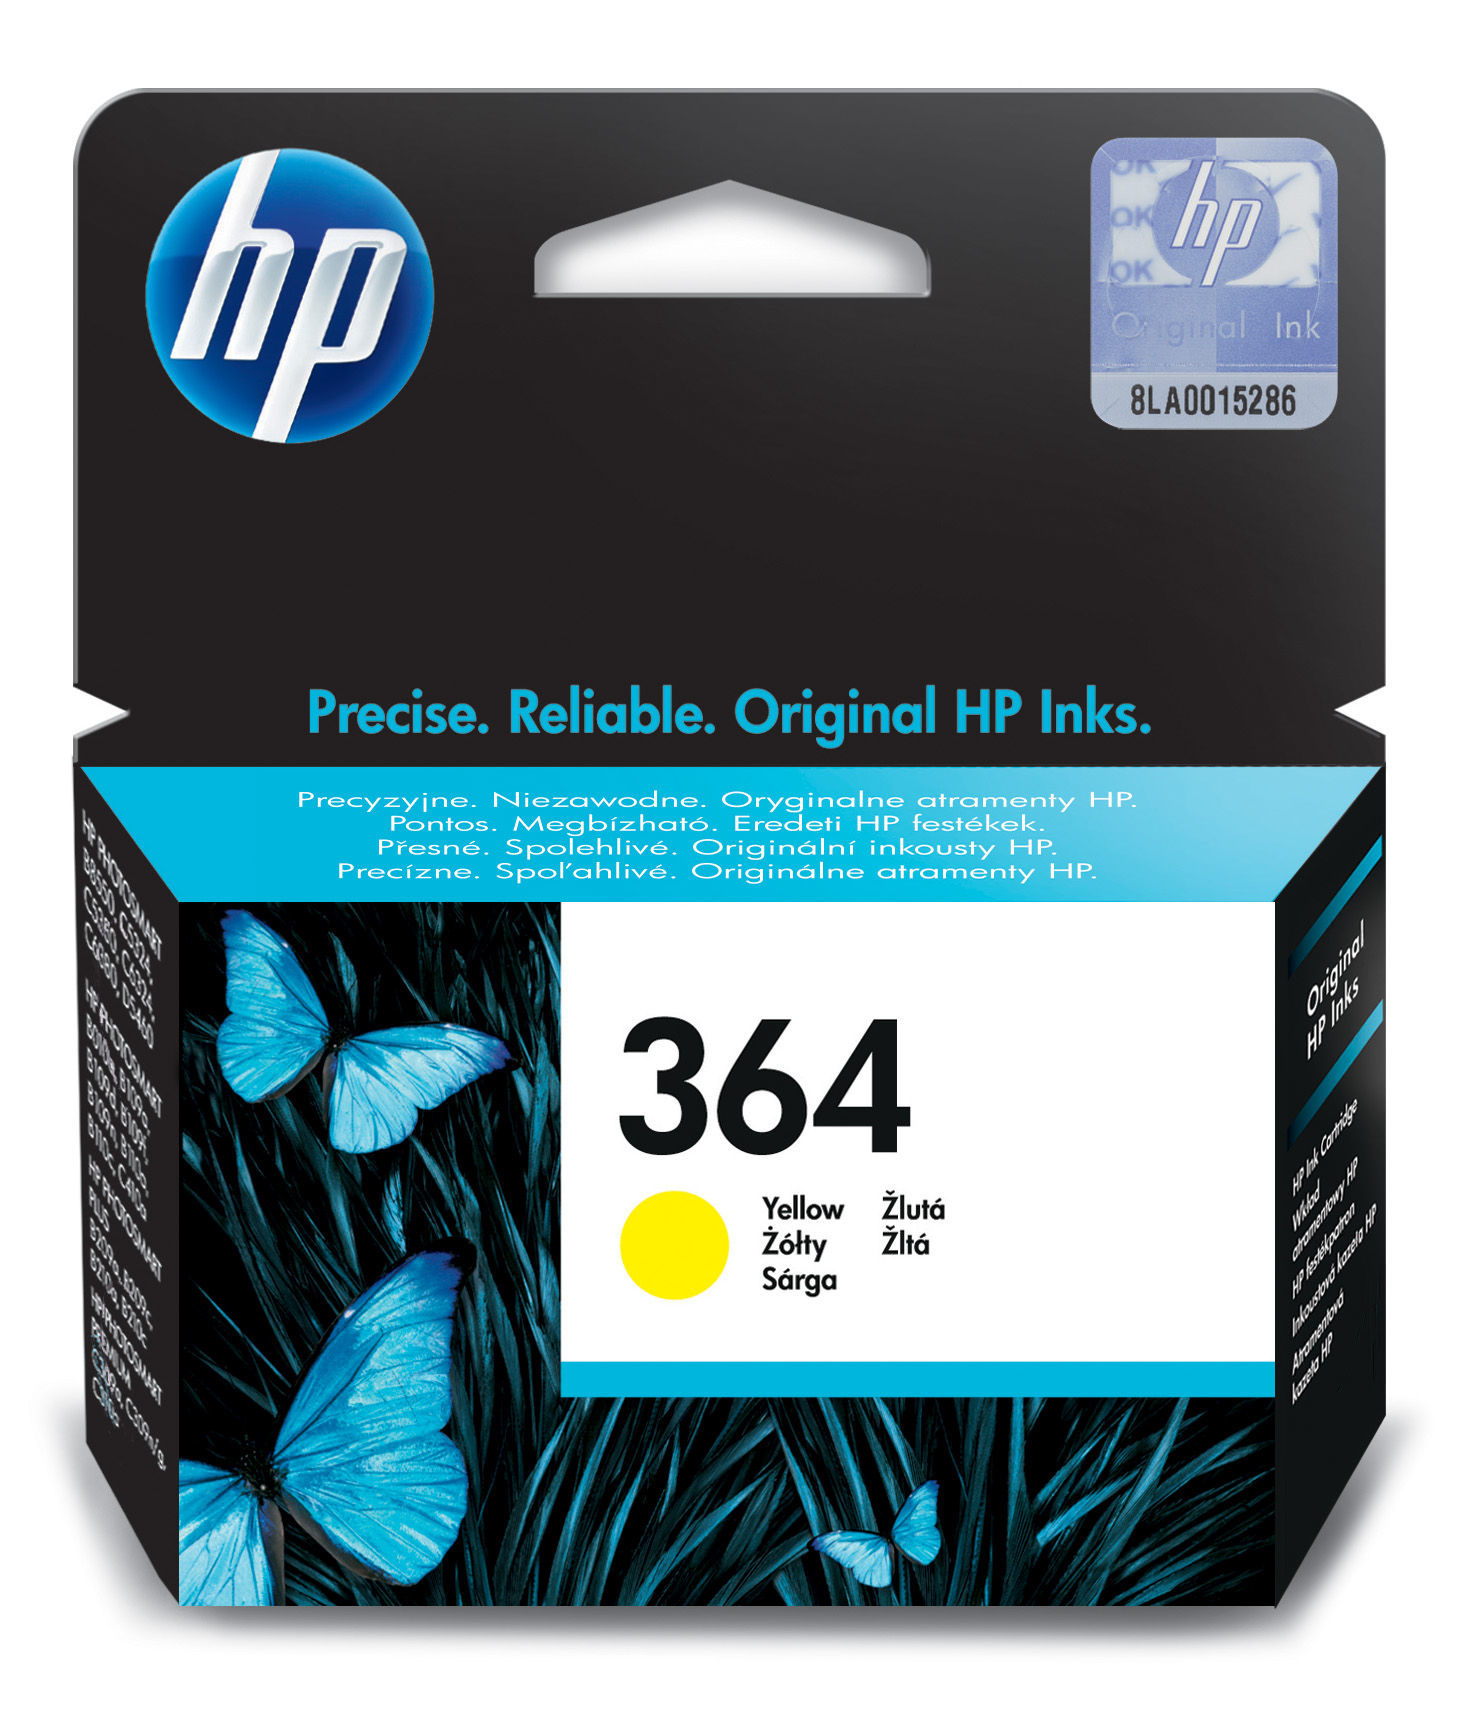 HP 364 inktcartridge geel standard capacity 3ml 300 pagina s 1-pack met vivera inkt